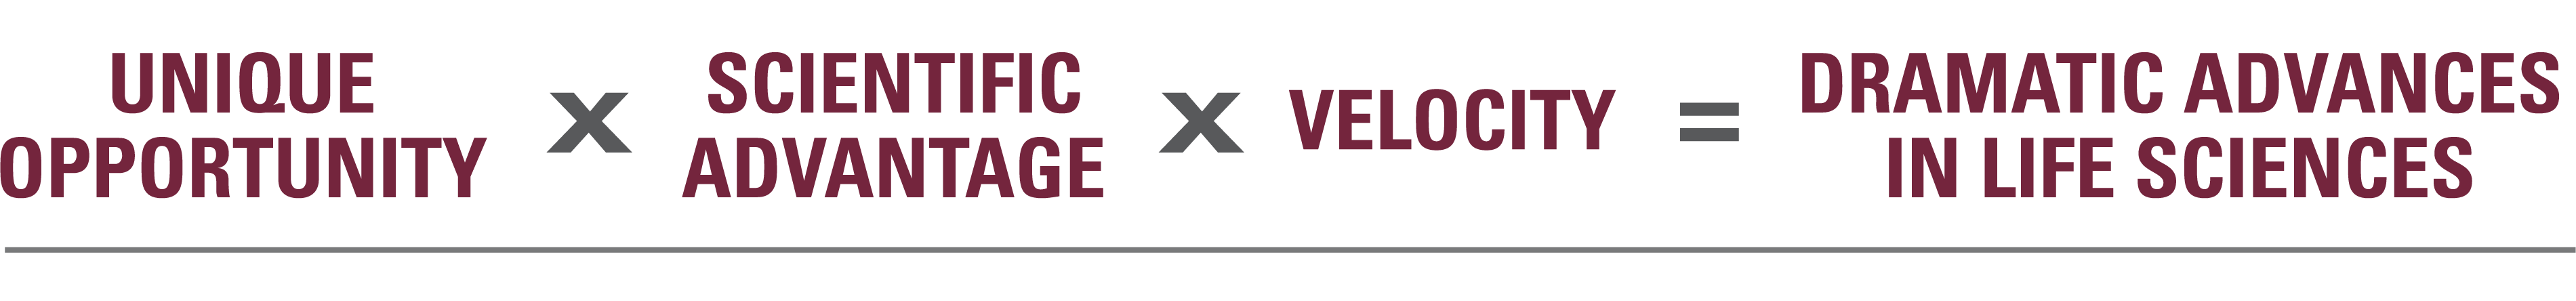 VelocityEquation